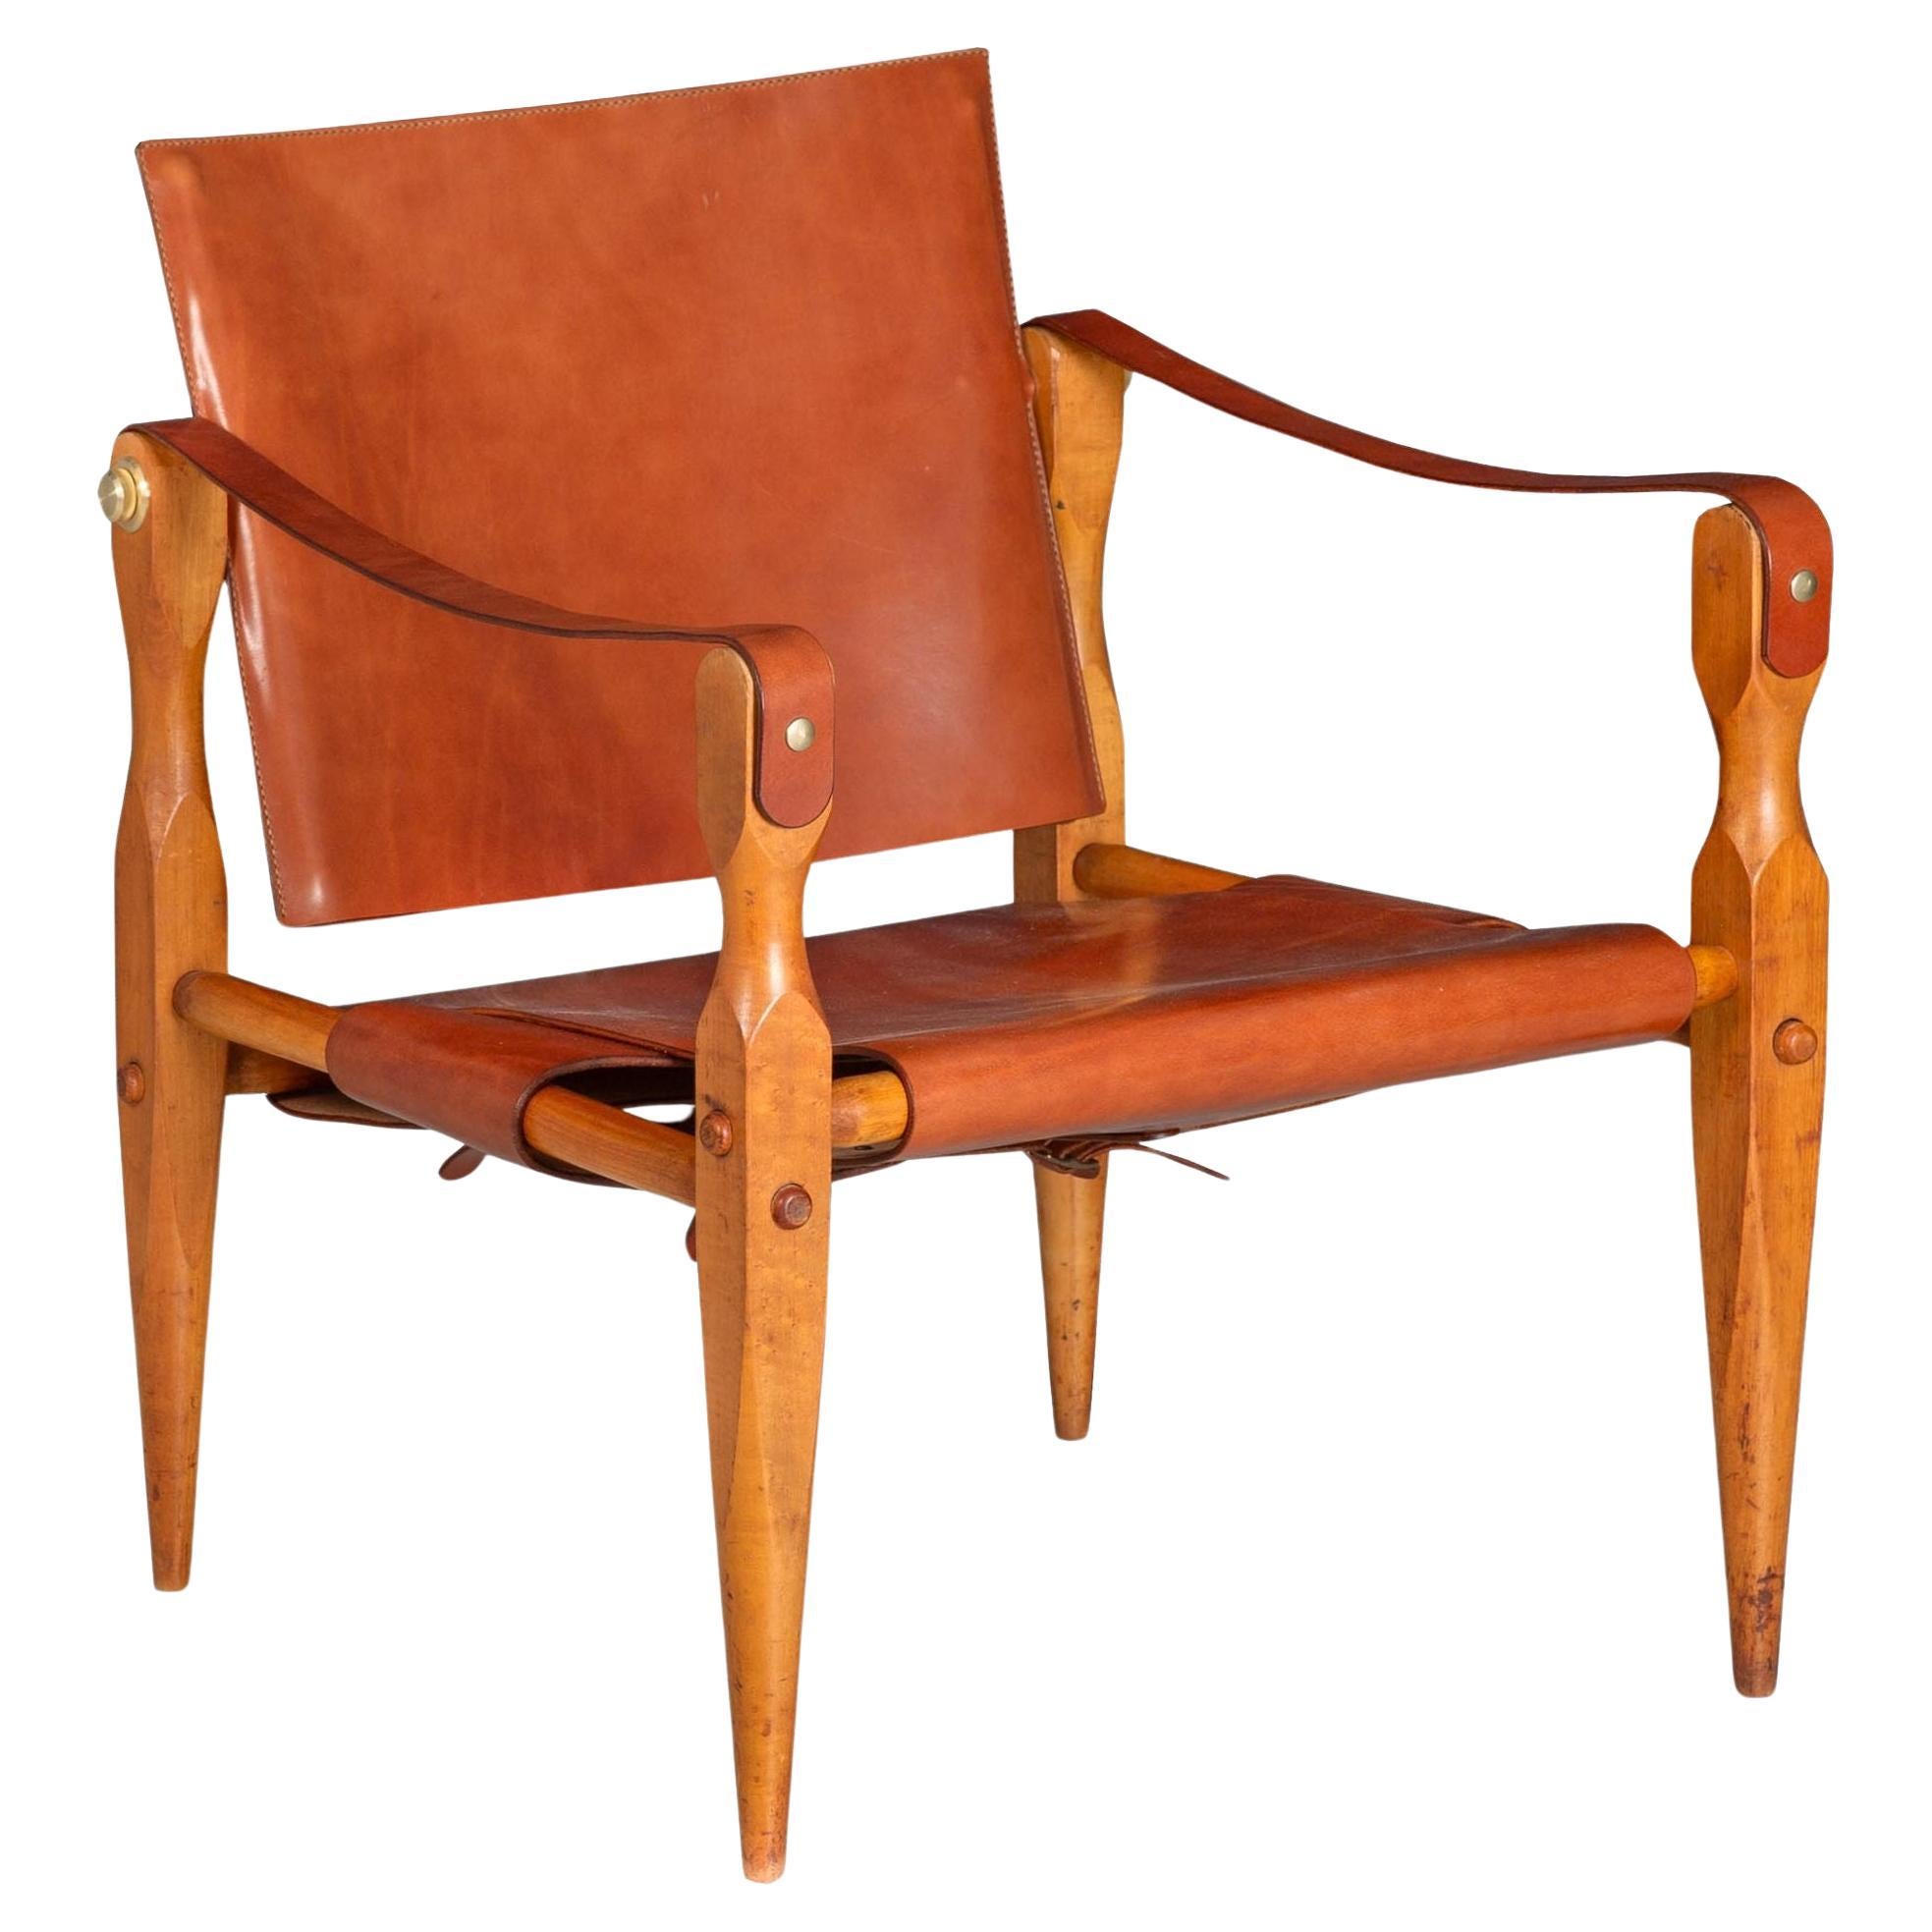 Circa 1970 Mid-Century Modern Leather Safari Chair attr. to Wilhelm Kienzle